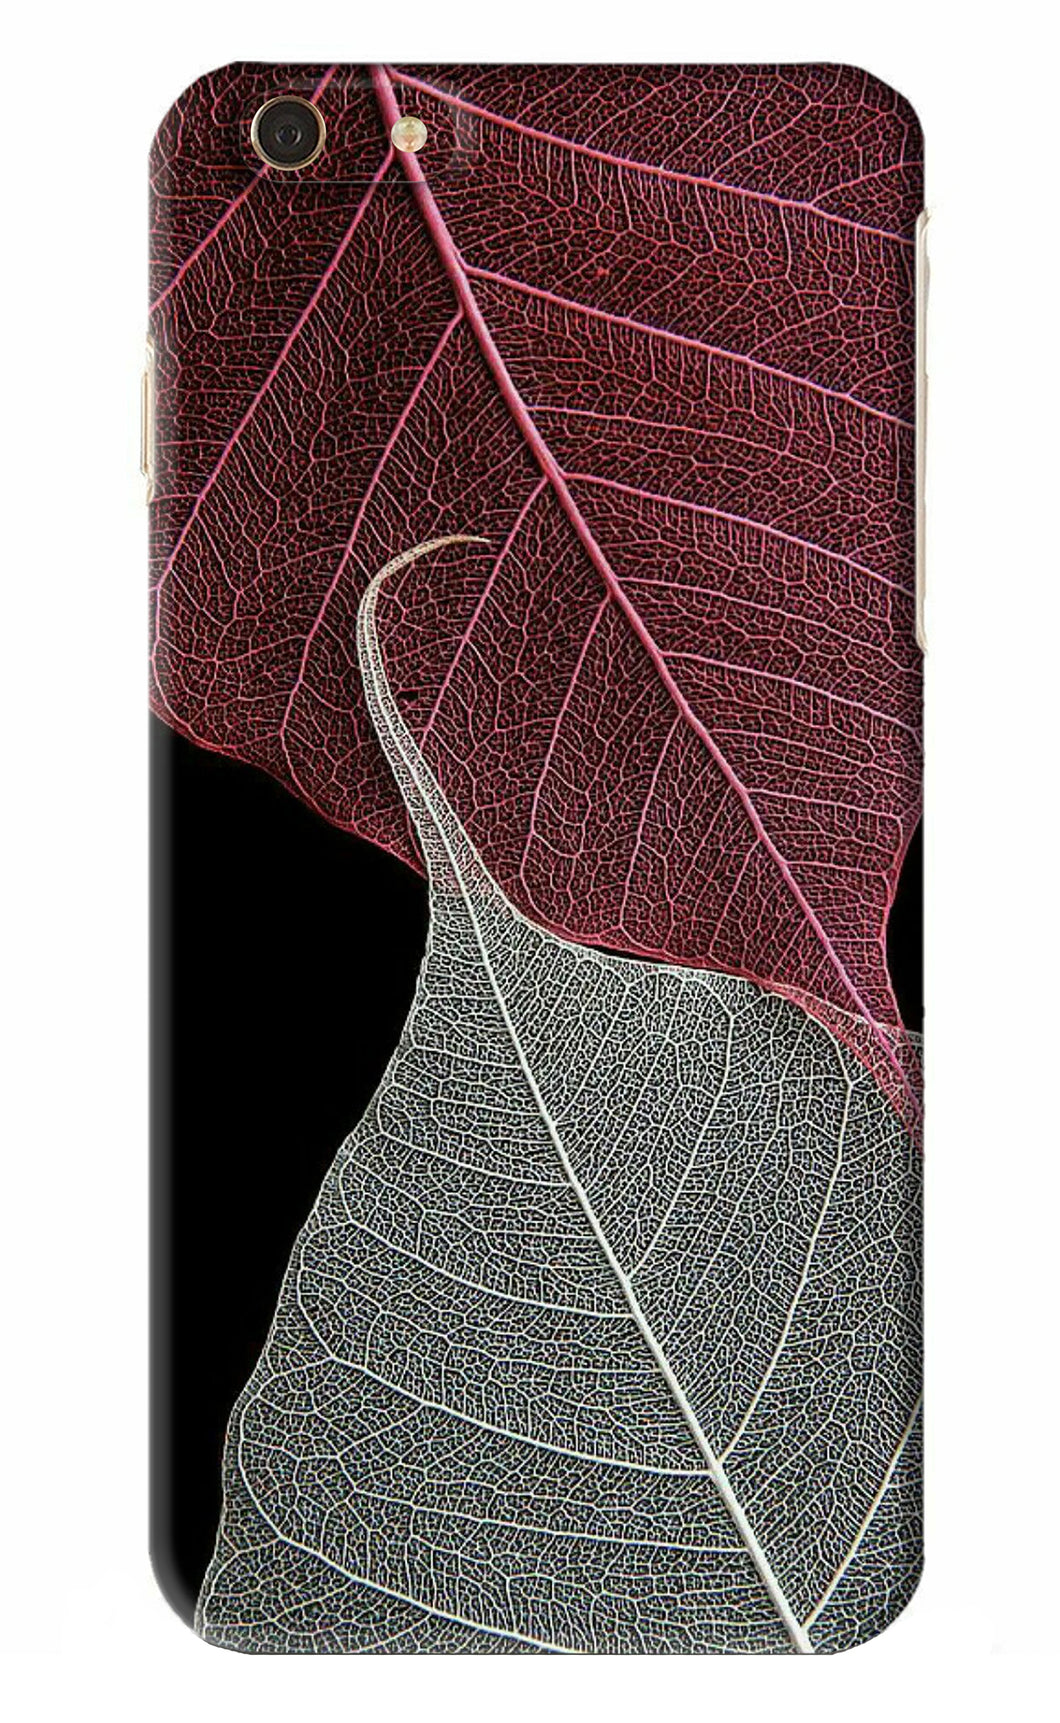 Leaf Pattern iPhone 6 Plus Back Skin Wrap